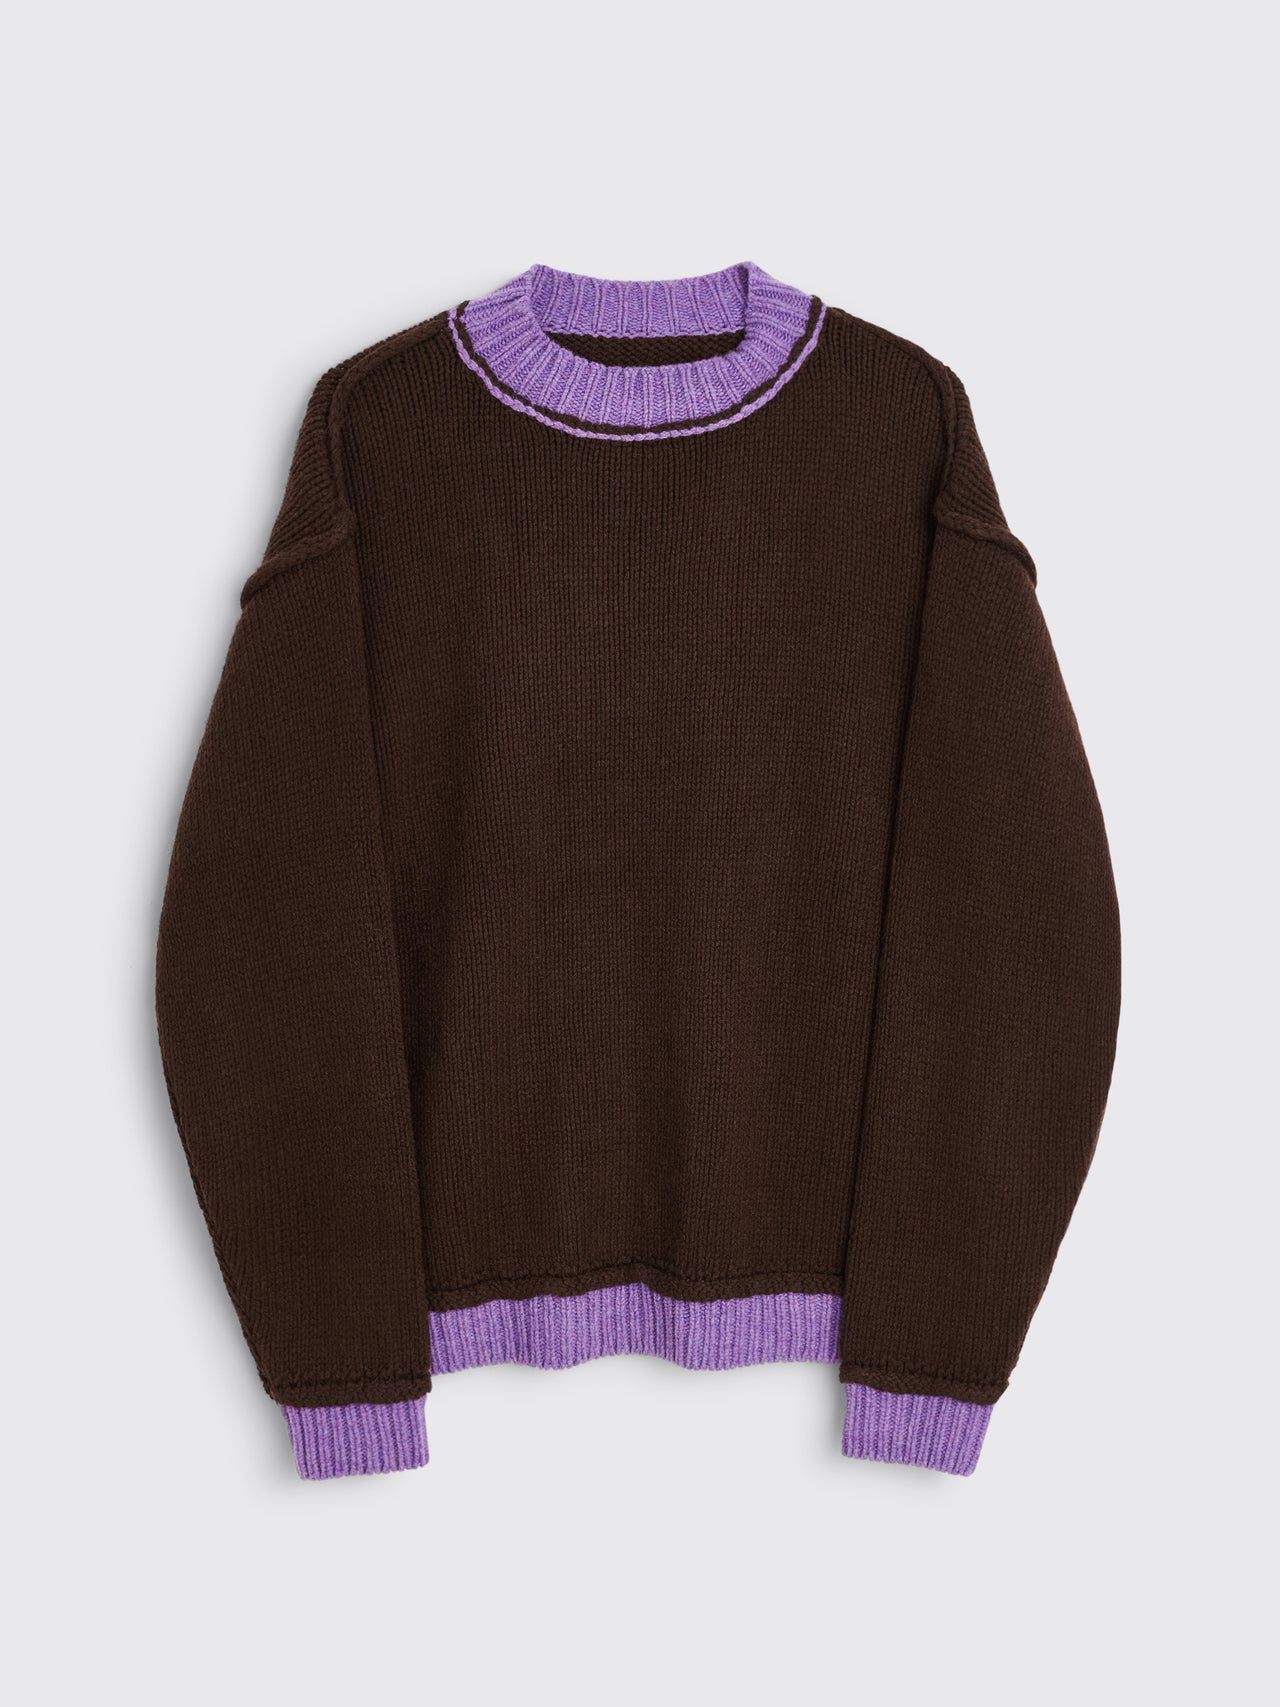 TRÈS BIEN everywear Inside Out Sweater Wool Dark Brown Purple